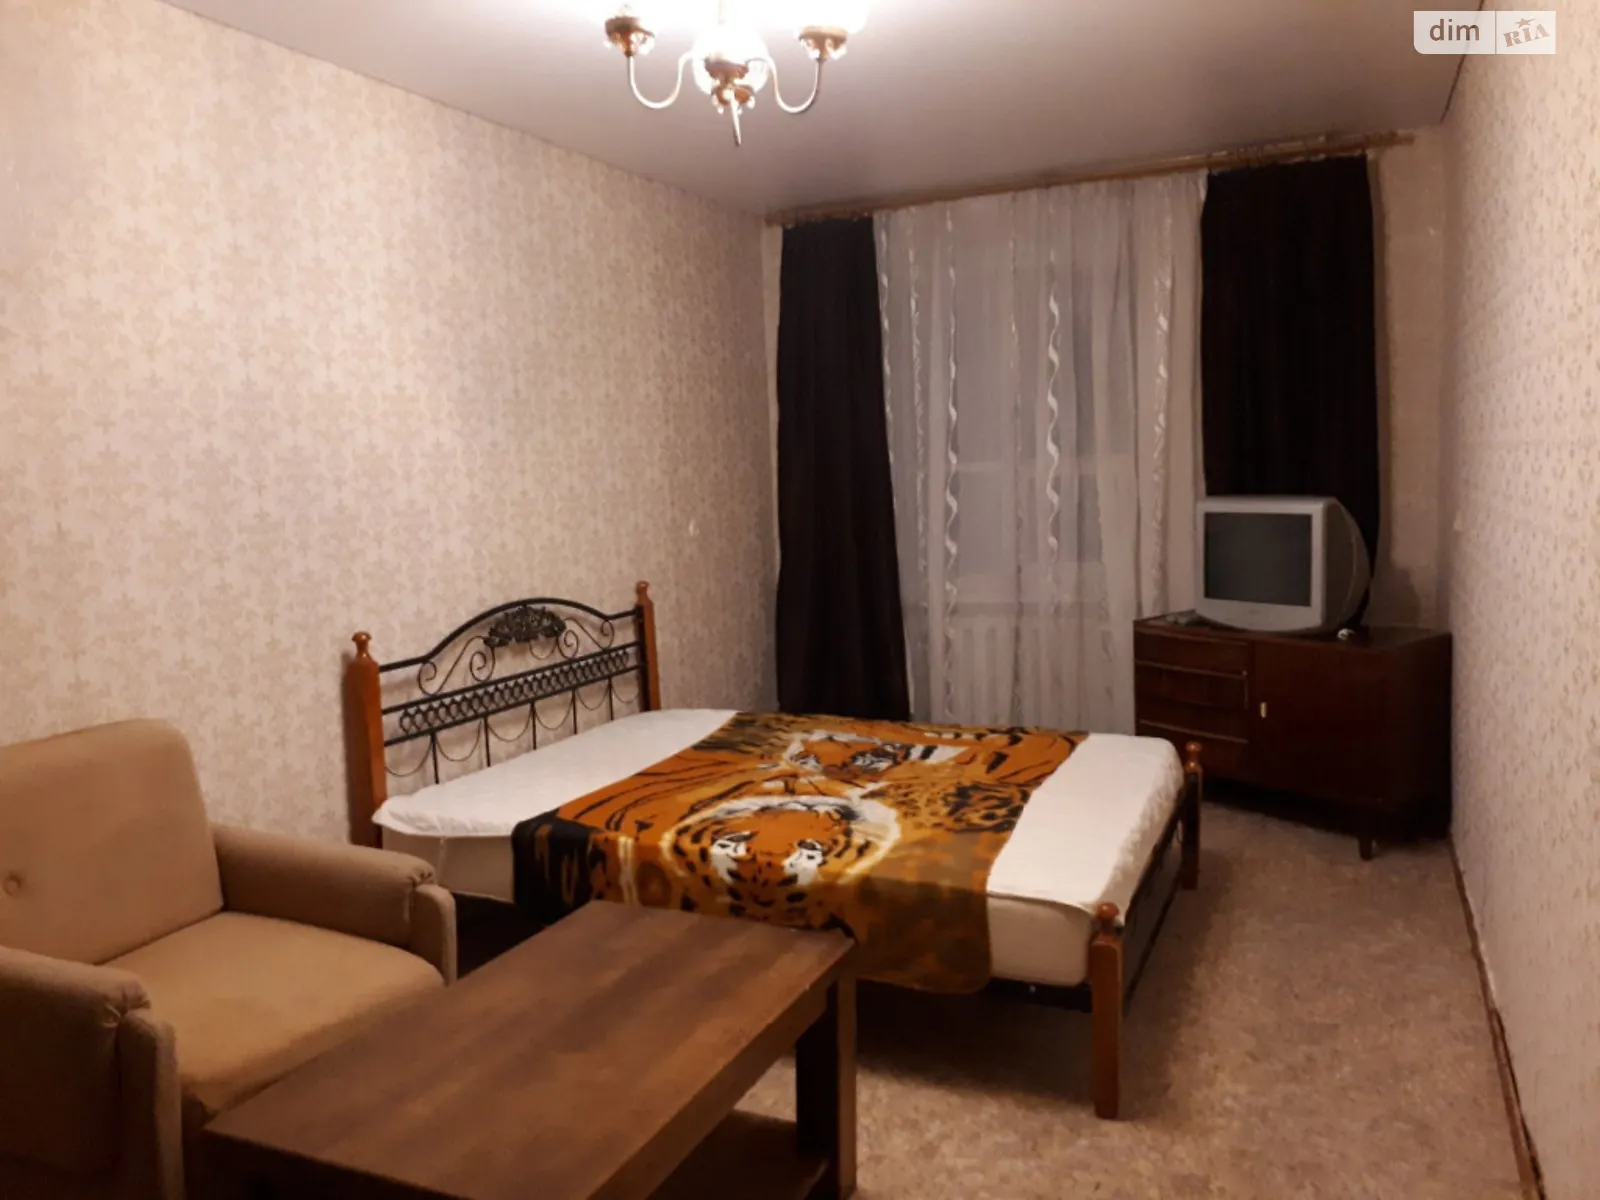 Сдается в аренду комната 25 кв. м в Одессе, цена: 2700 грн - фото 1